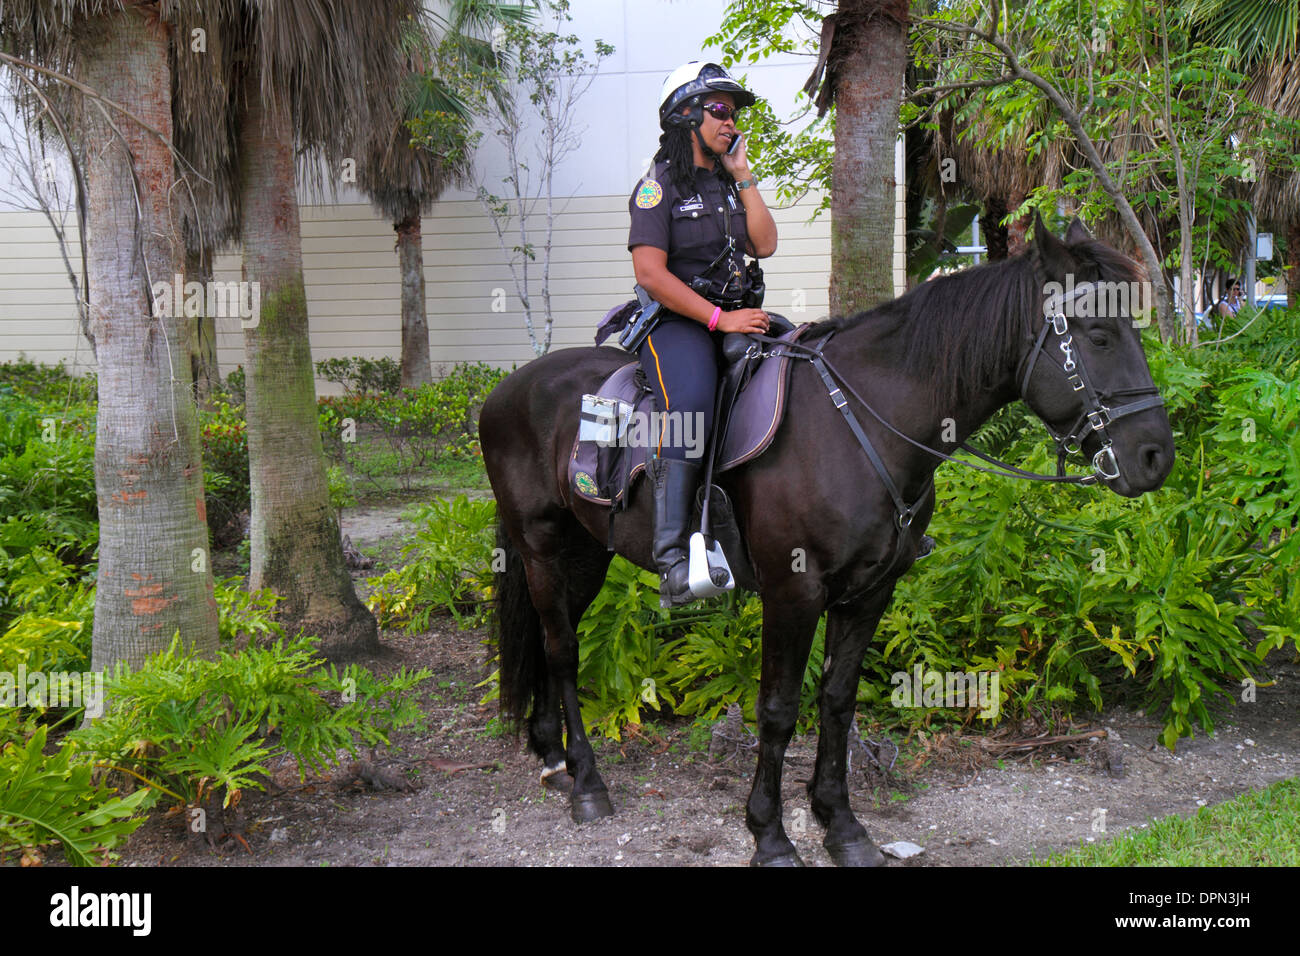 Miami Florida,Midtown,police,policewoman,Black woman female women,horse,horseback,patrol,FL131231163 Stock Photo